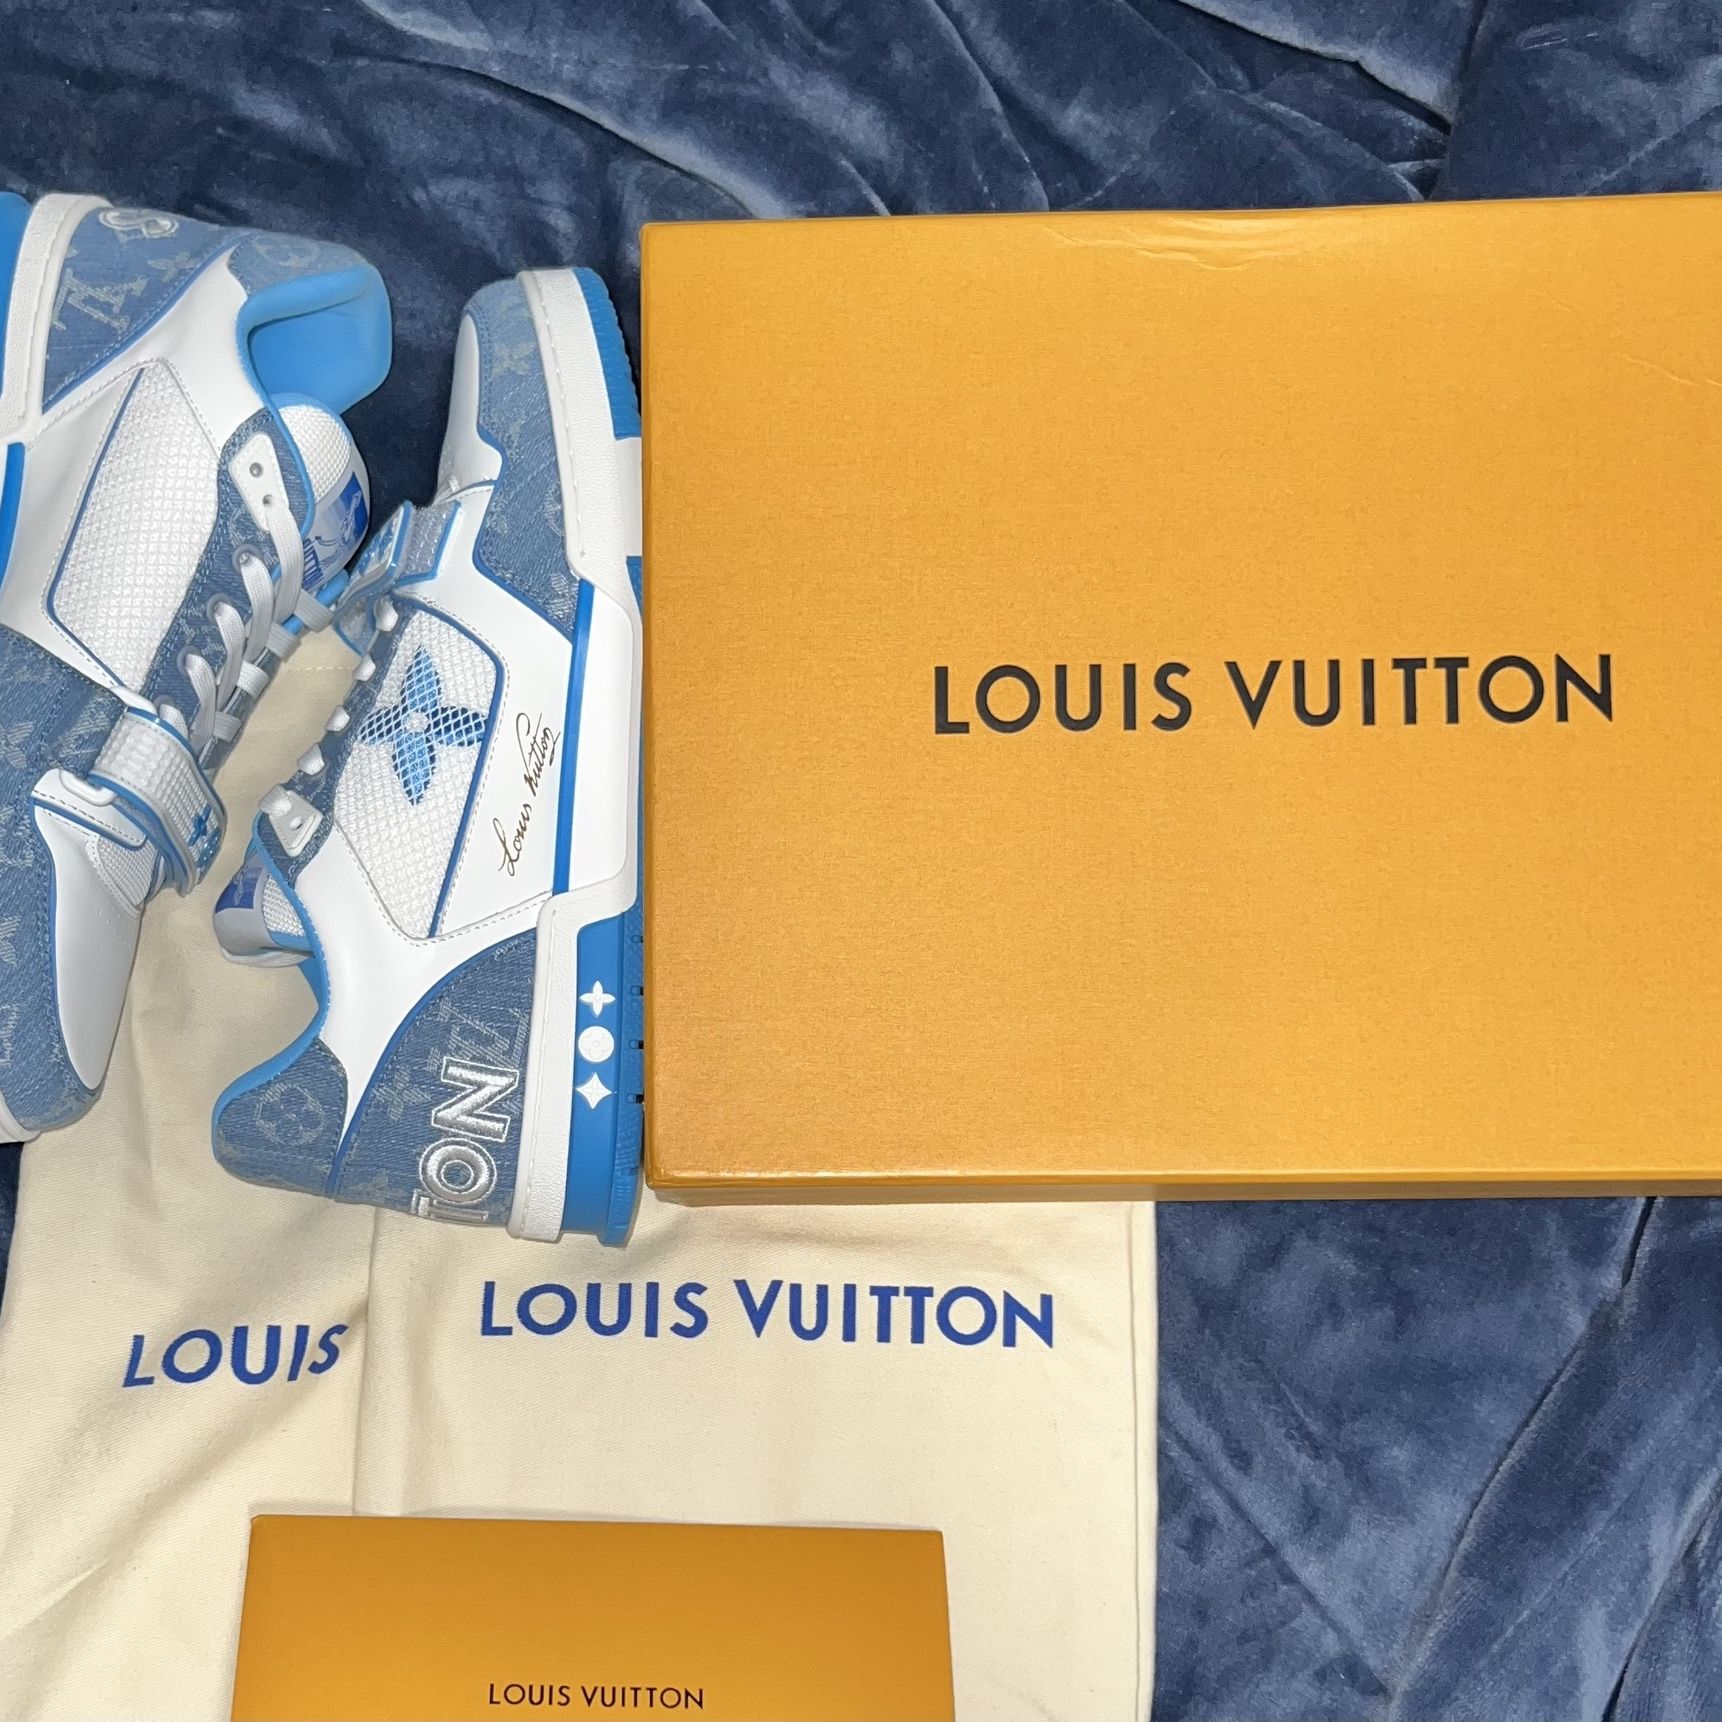 Louis Vuitton 408 Trainers for Sale in Elizabeth, NJ - OfferUp